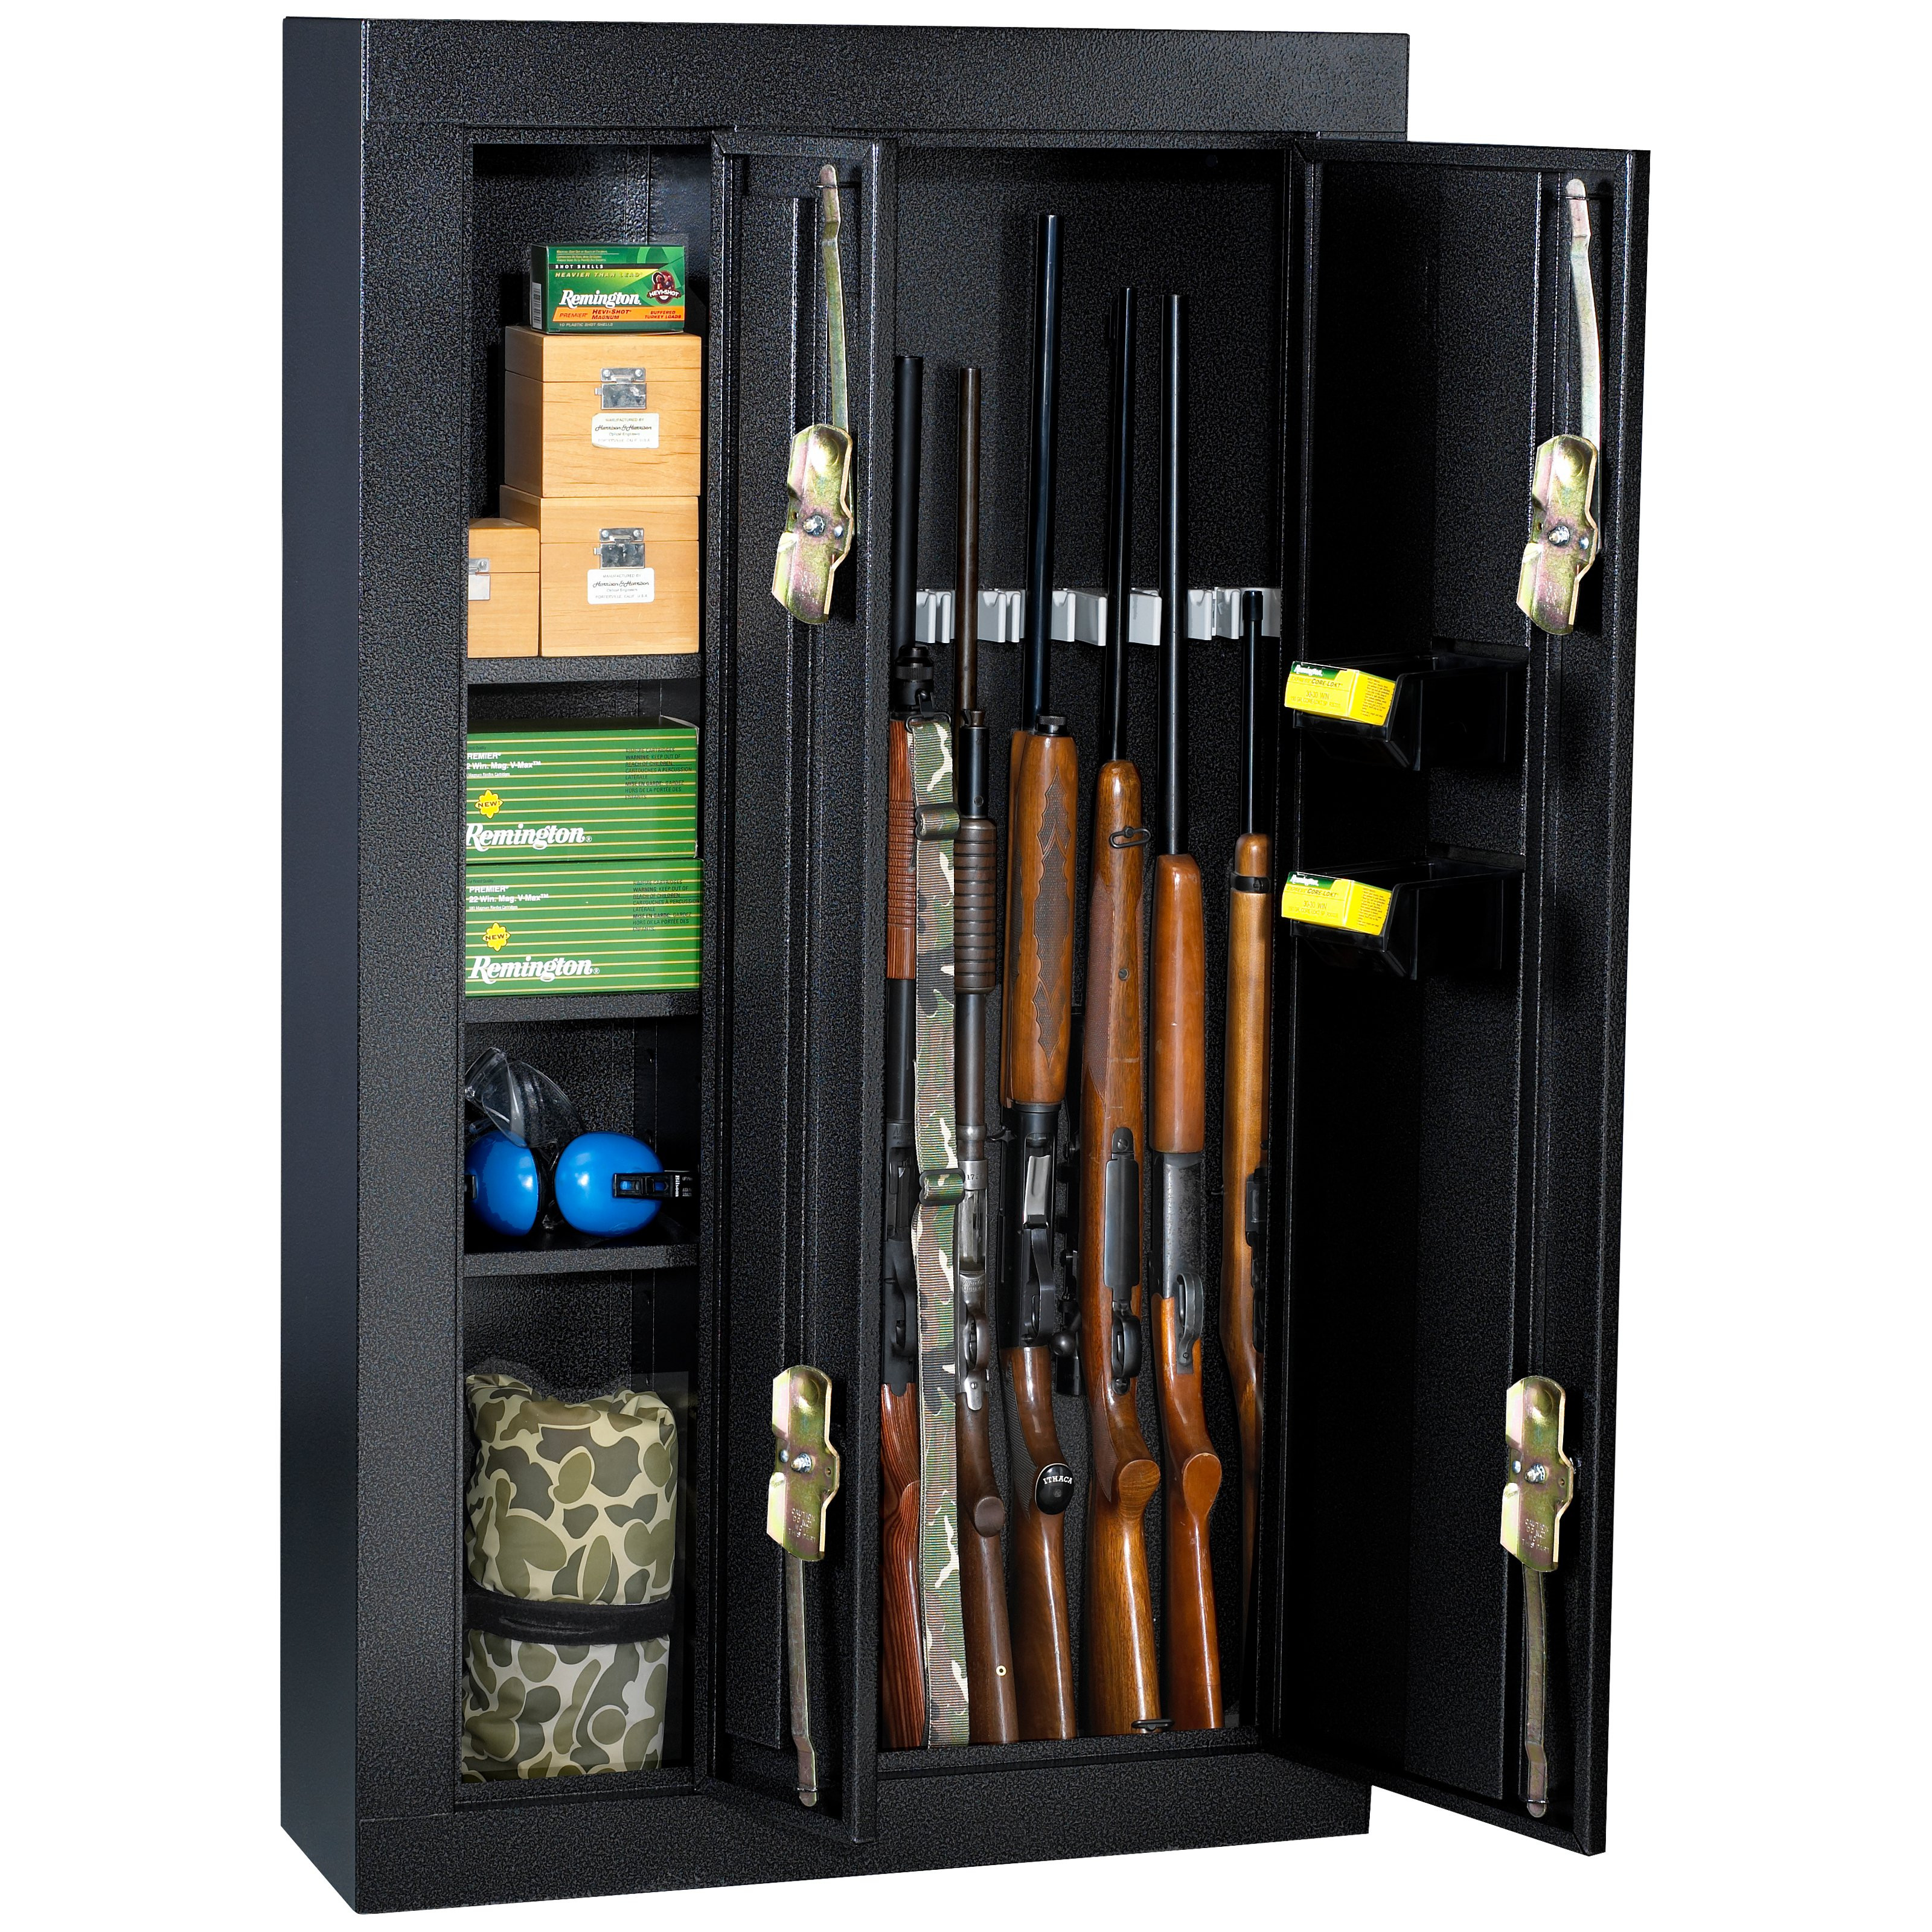 Best ideas about Metal Gun Cabinet
. Save or Pin Homak 8 Gun Double Door Steel Gun Cabinet Gun Cabinets Now.